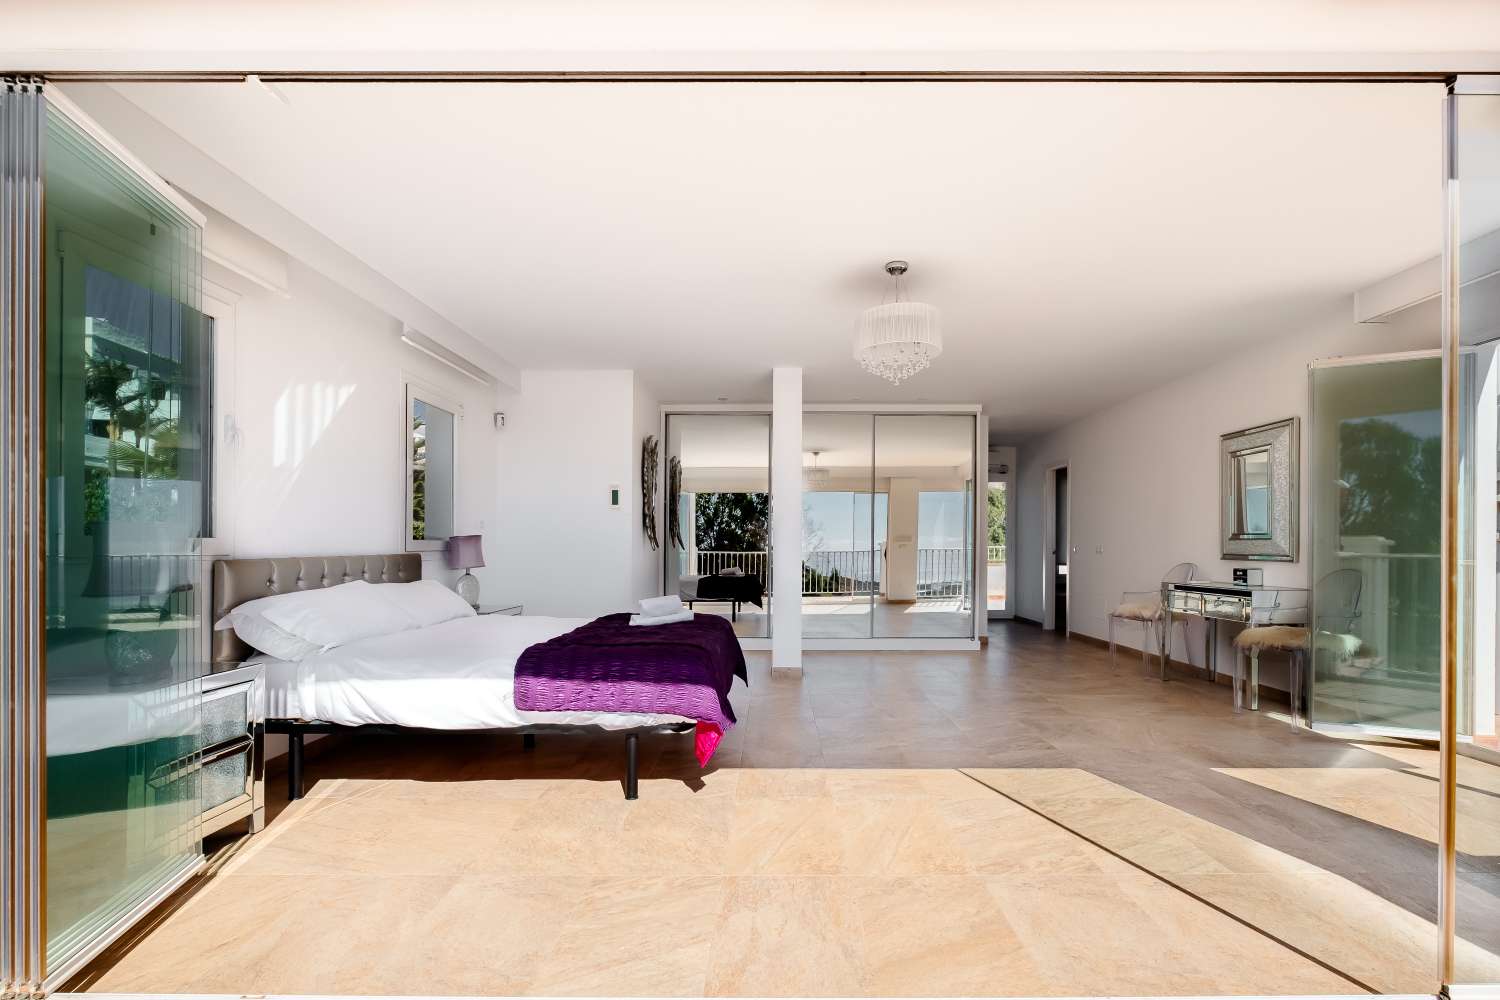 Newly refurbished luxury villa located between Nerja & Frigiliana